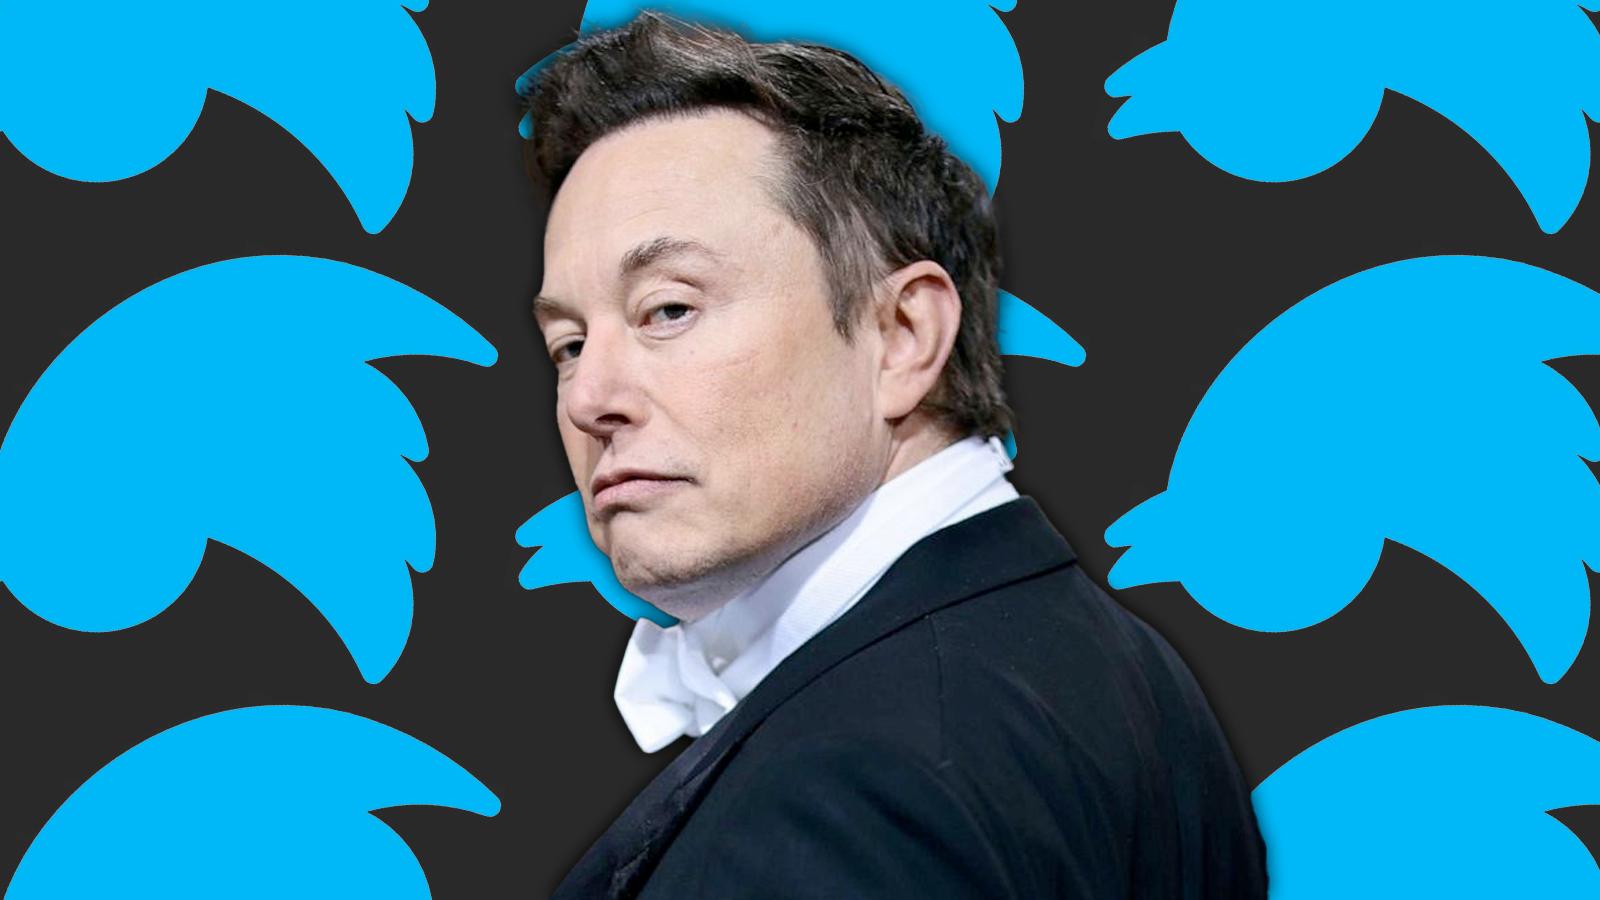 Elon Musk with Twitter birds behind it